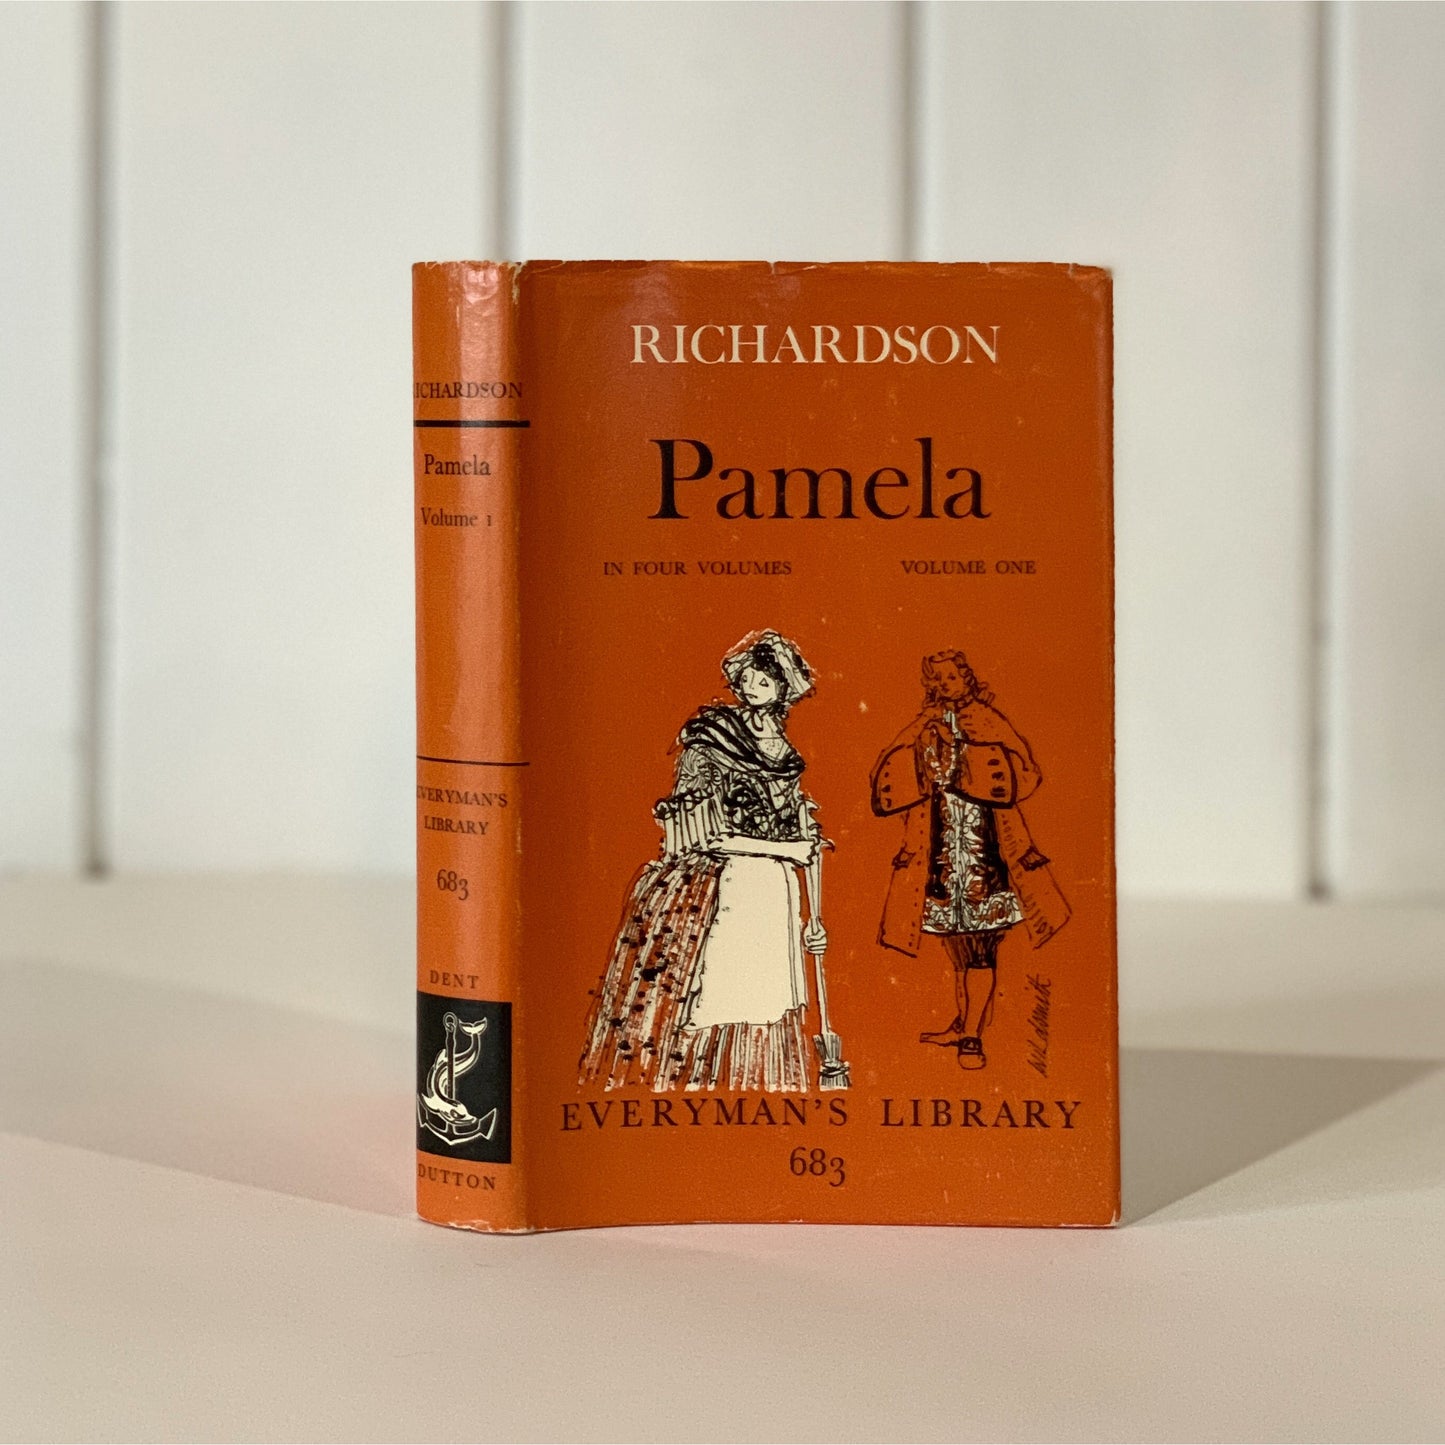 Pamela, Volume One, Hardcover - Everyman's Library 683, 1962 Hardcover